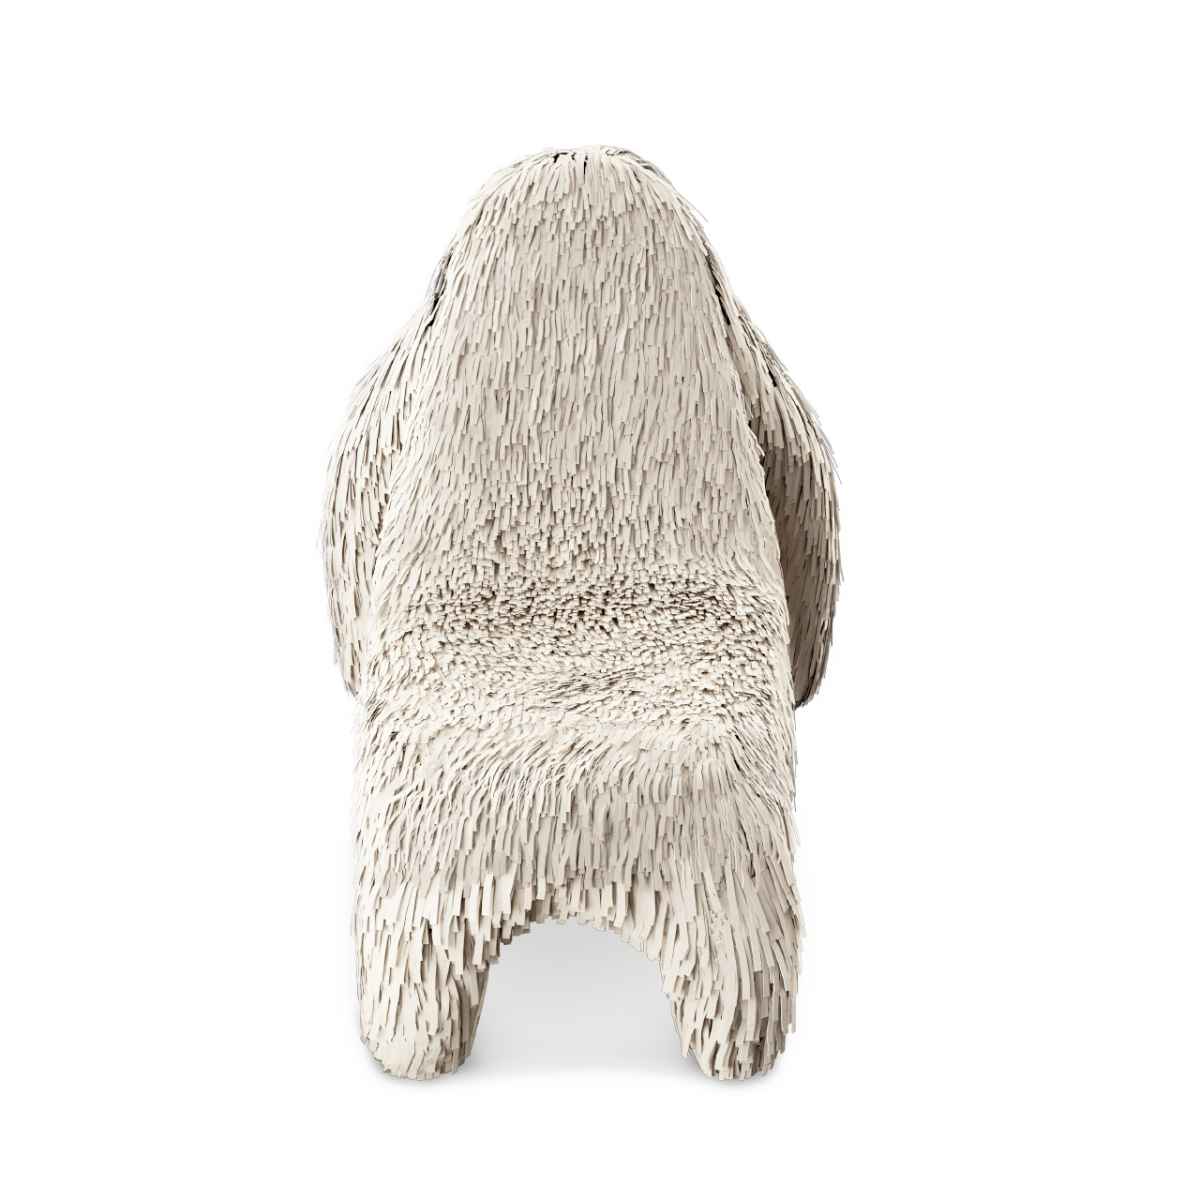 Gorilla Chair by Marcantonio - Scarlet Splendour